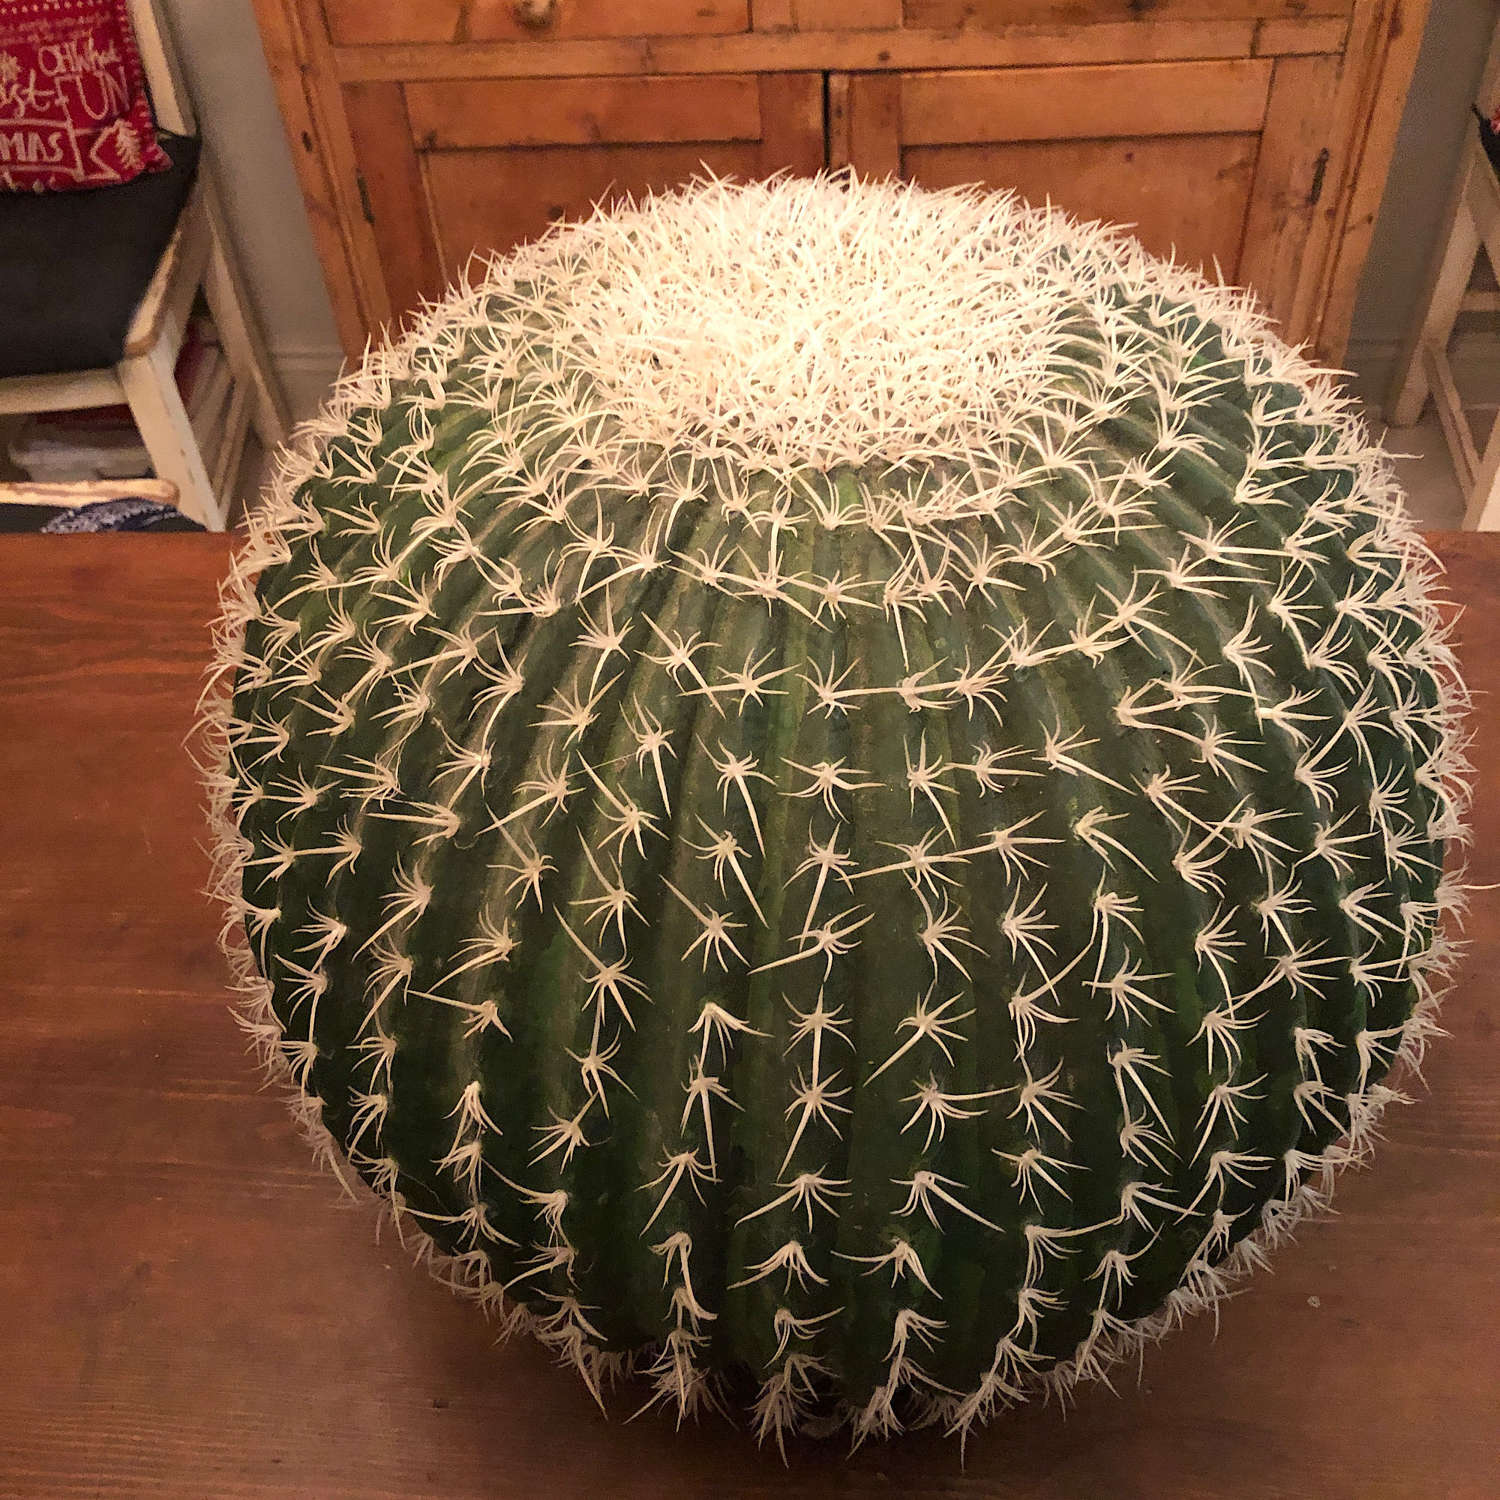 A 1970’s Faux Golden Barrel cactus